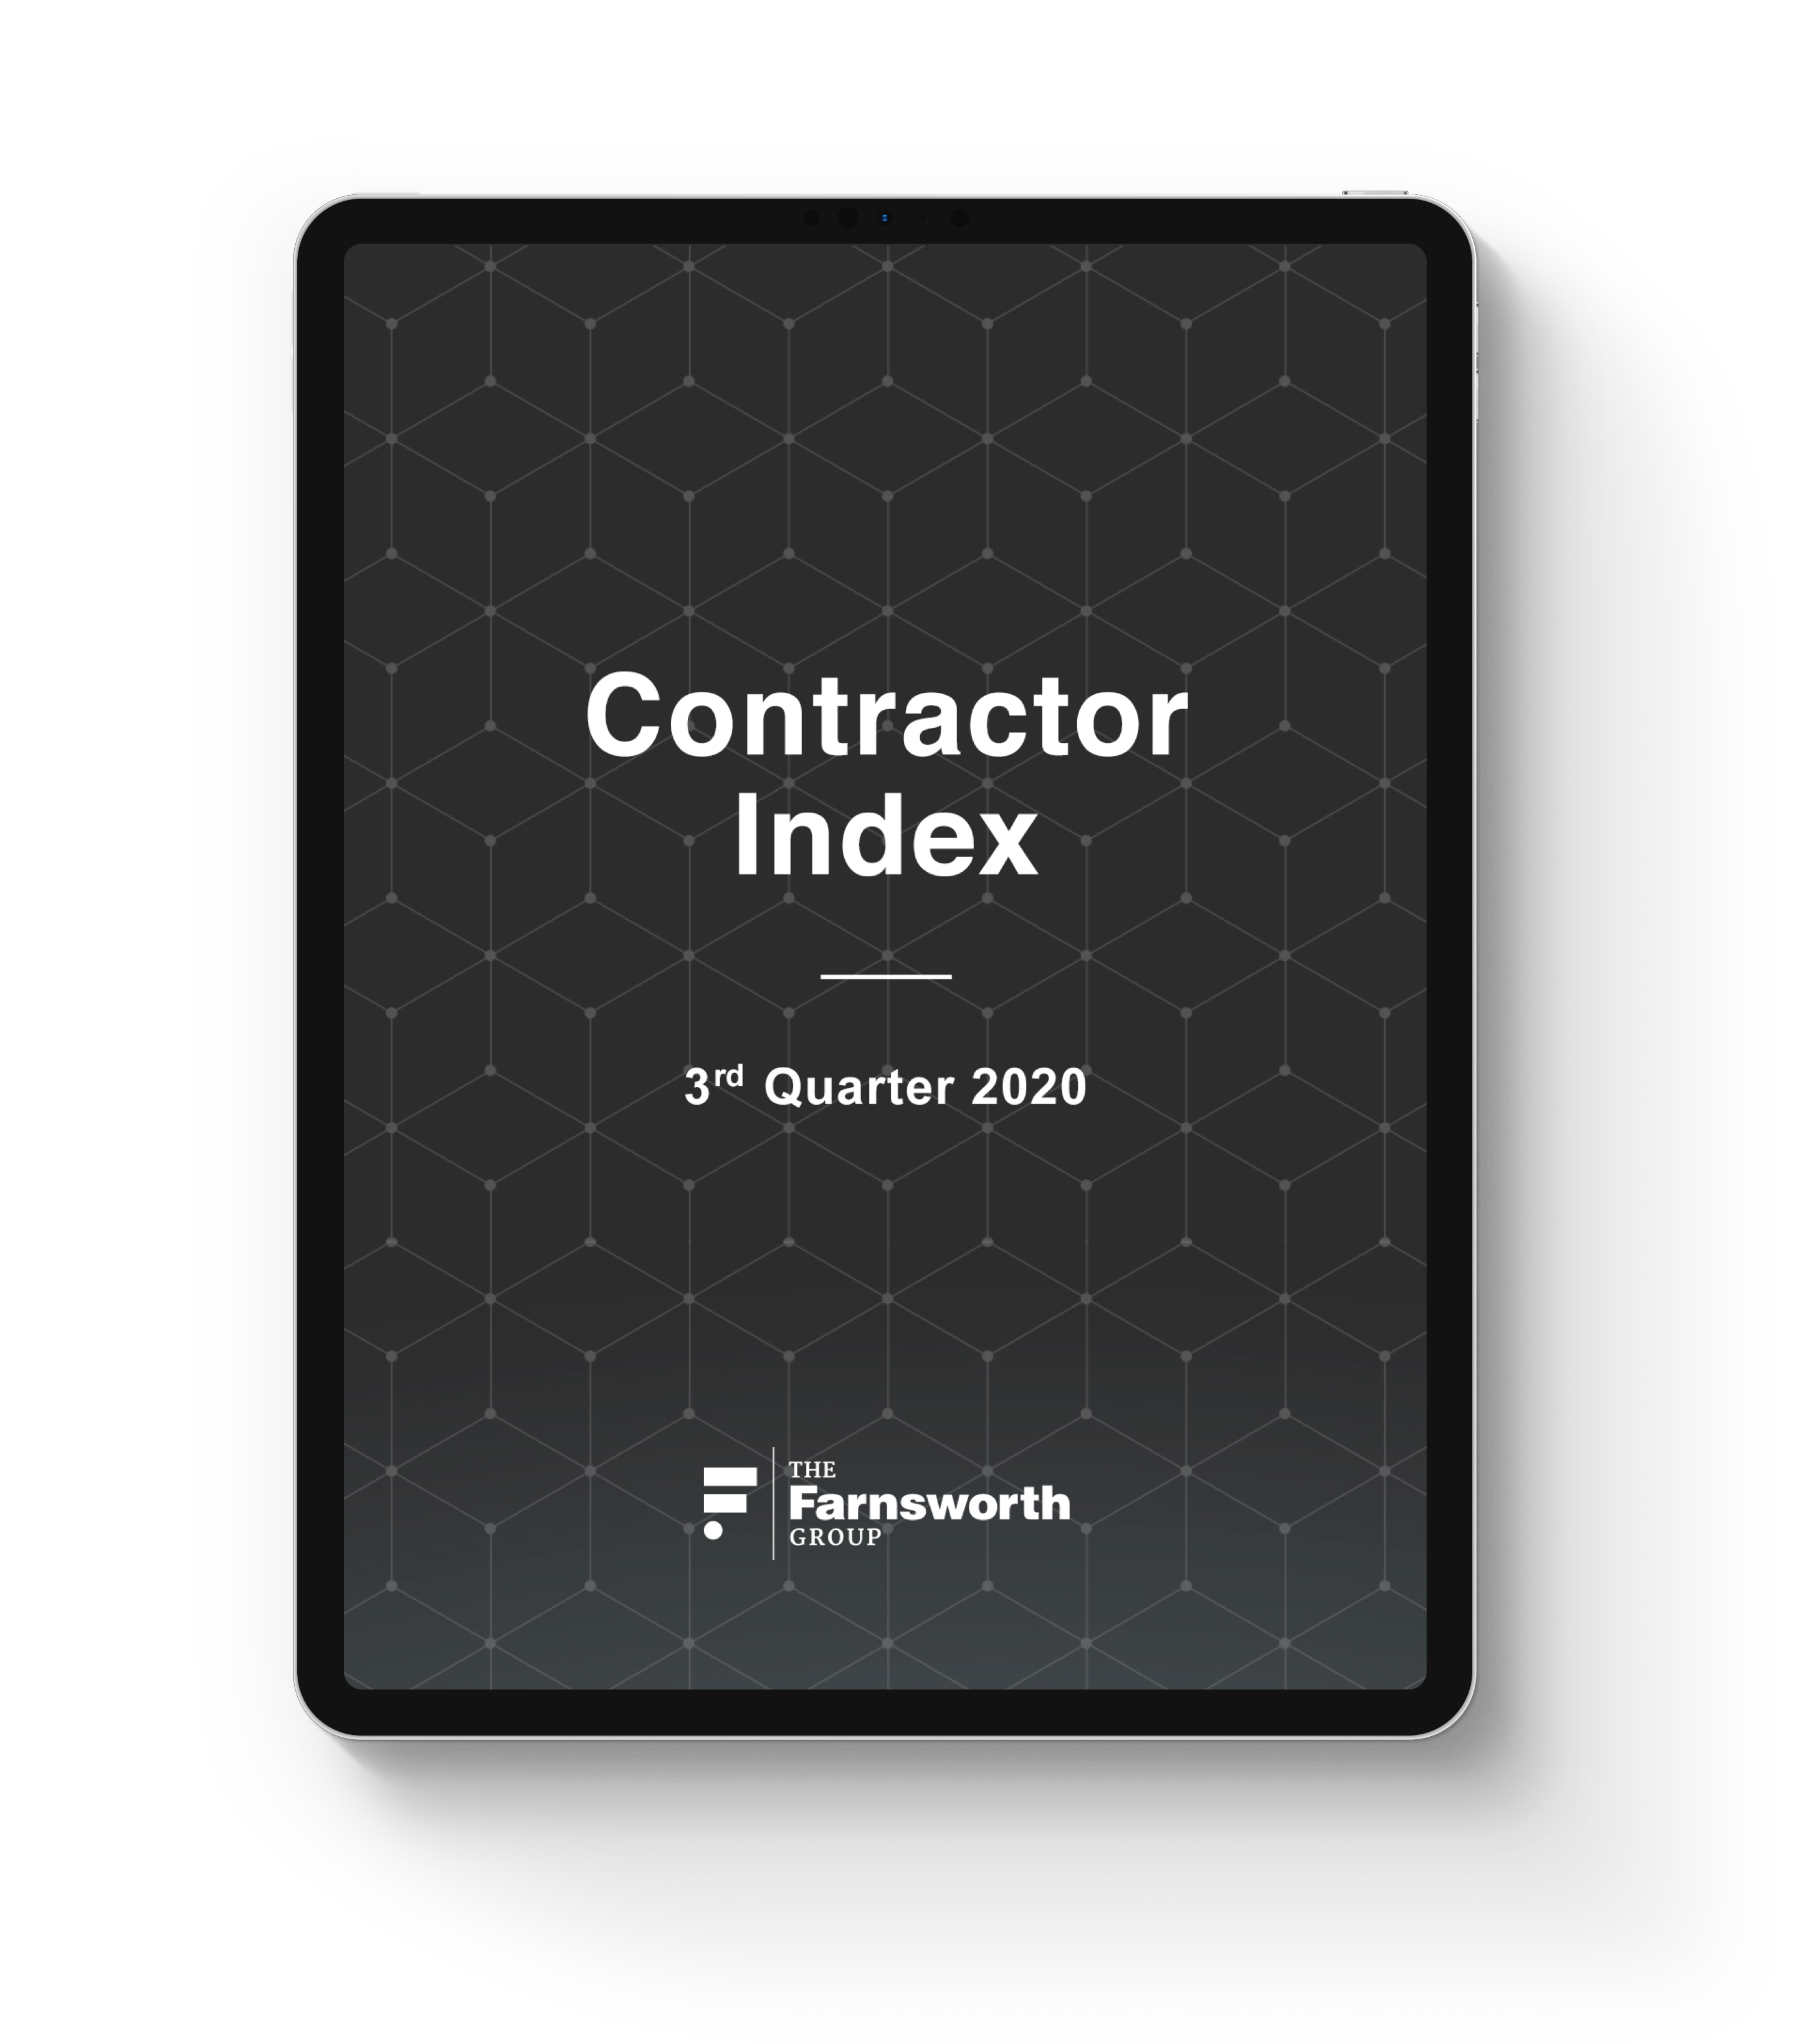 Farnsworth_Contractor Index_2020 Q3_iPad Mockup